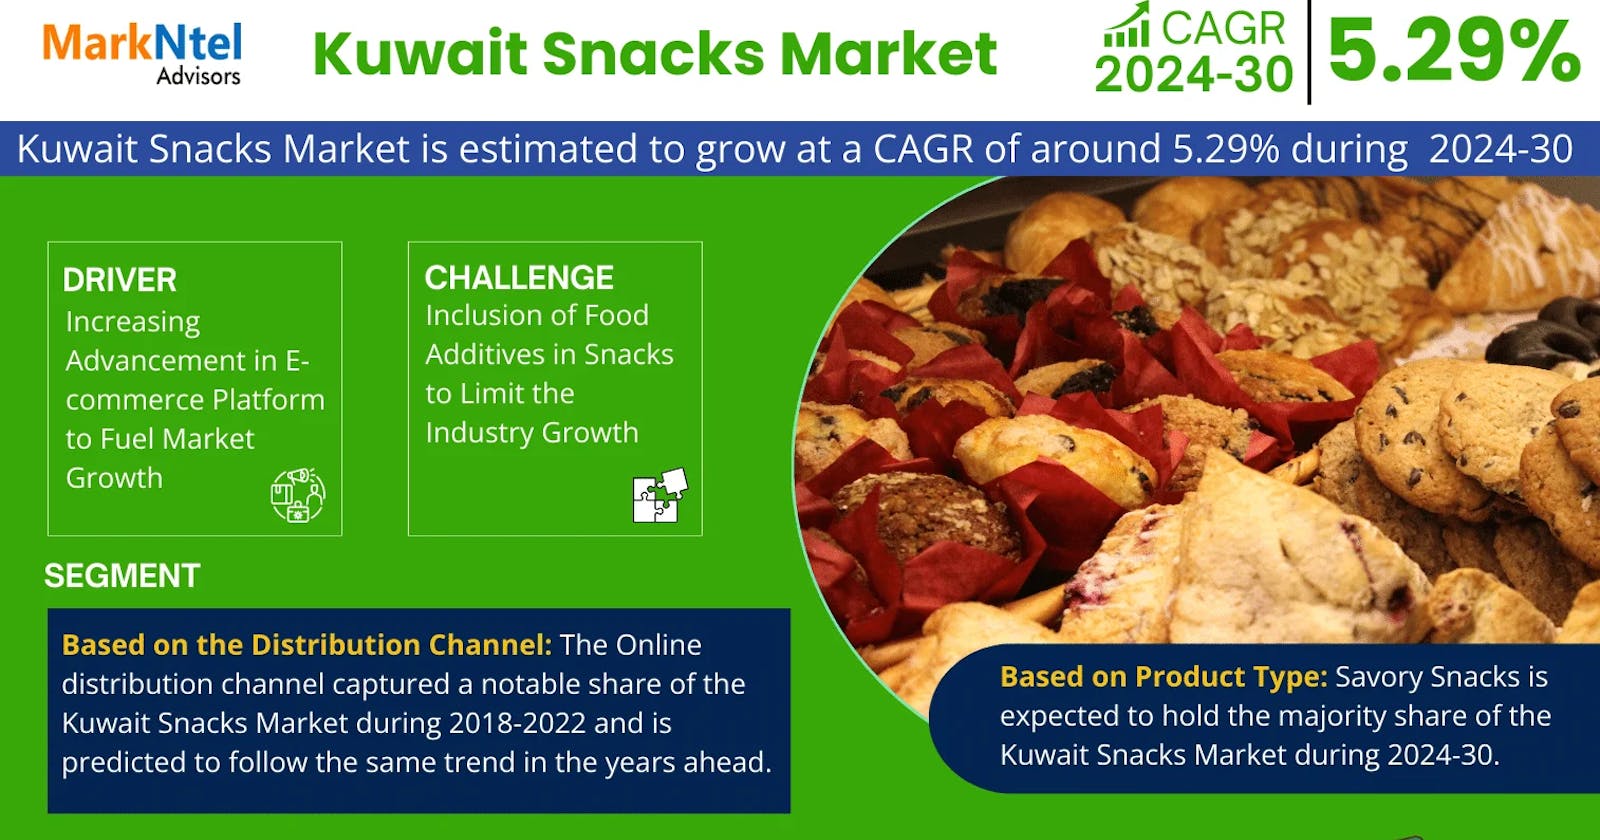 Kuwait Snacks Market Anticipates Robust 5.29% CAGR for 2024-30